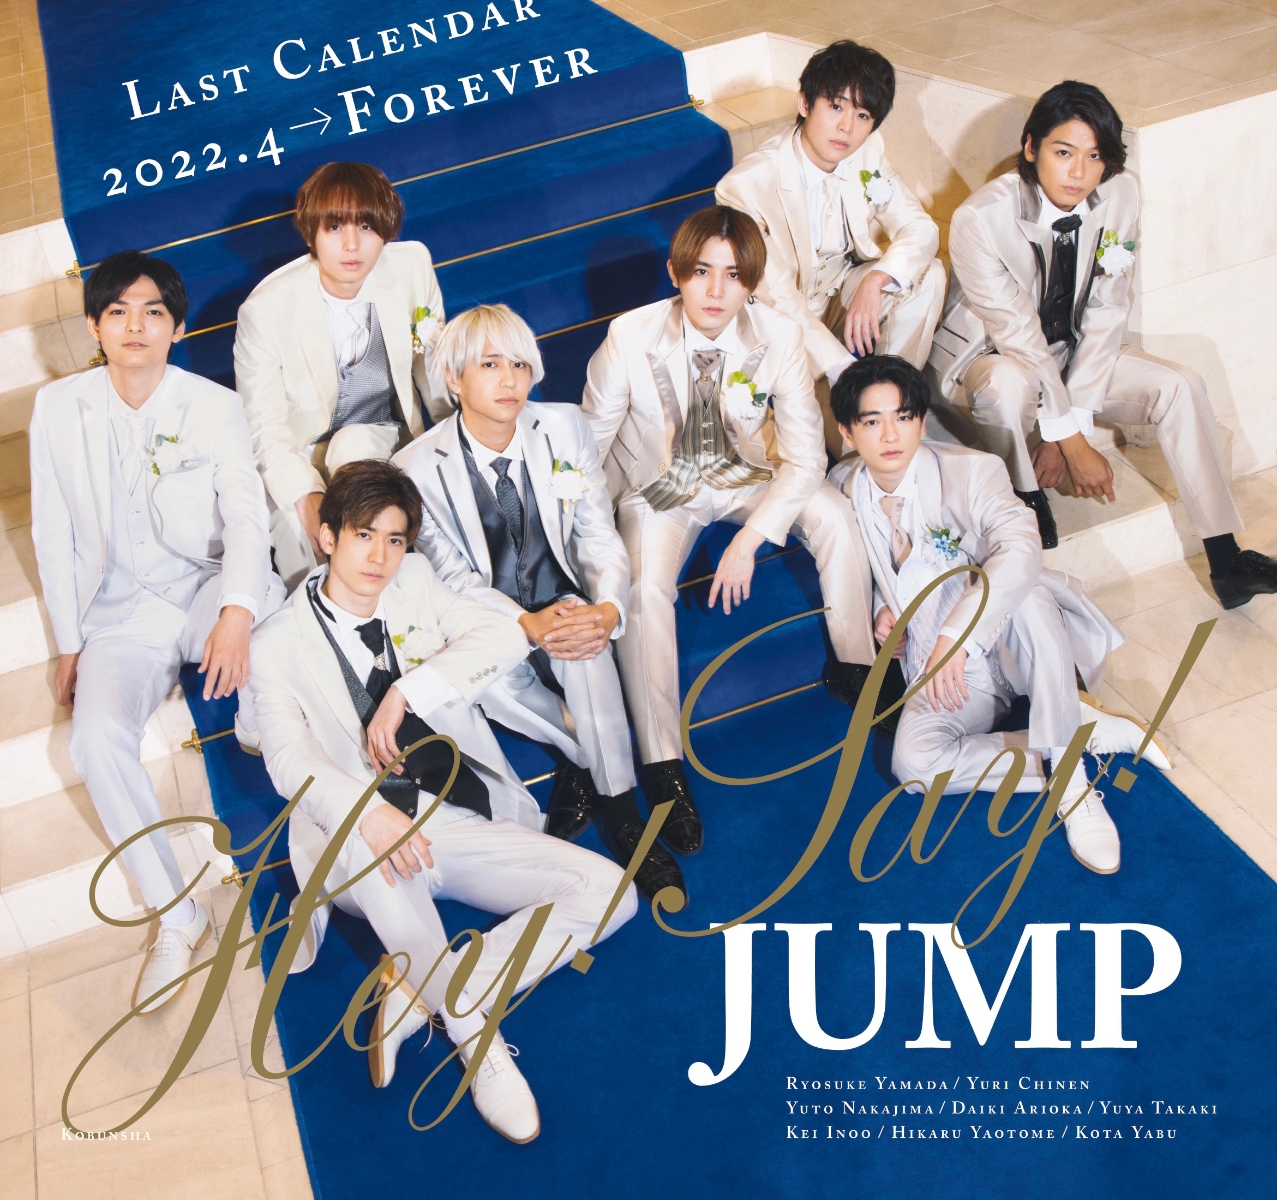 Hey!Say!JUMPラストカレンダー2022.4→Forever【ジャニーズ事務所公認】